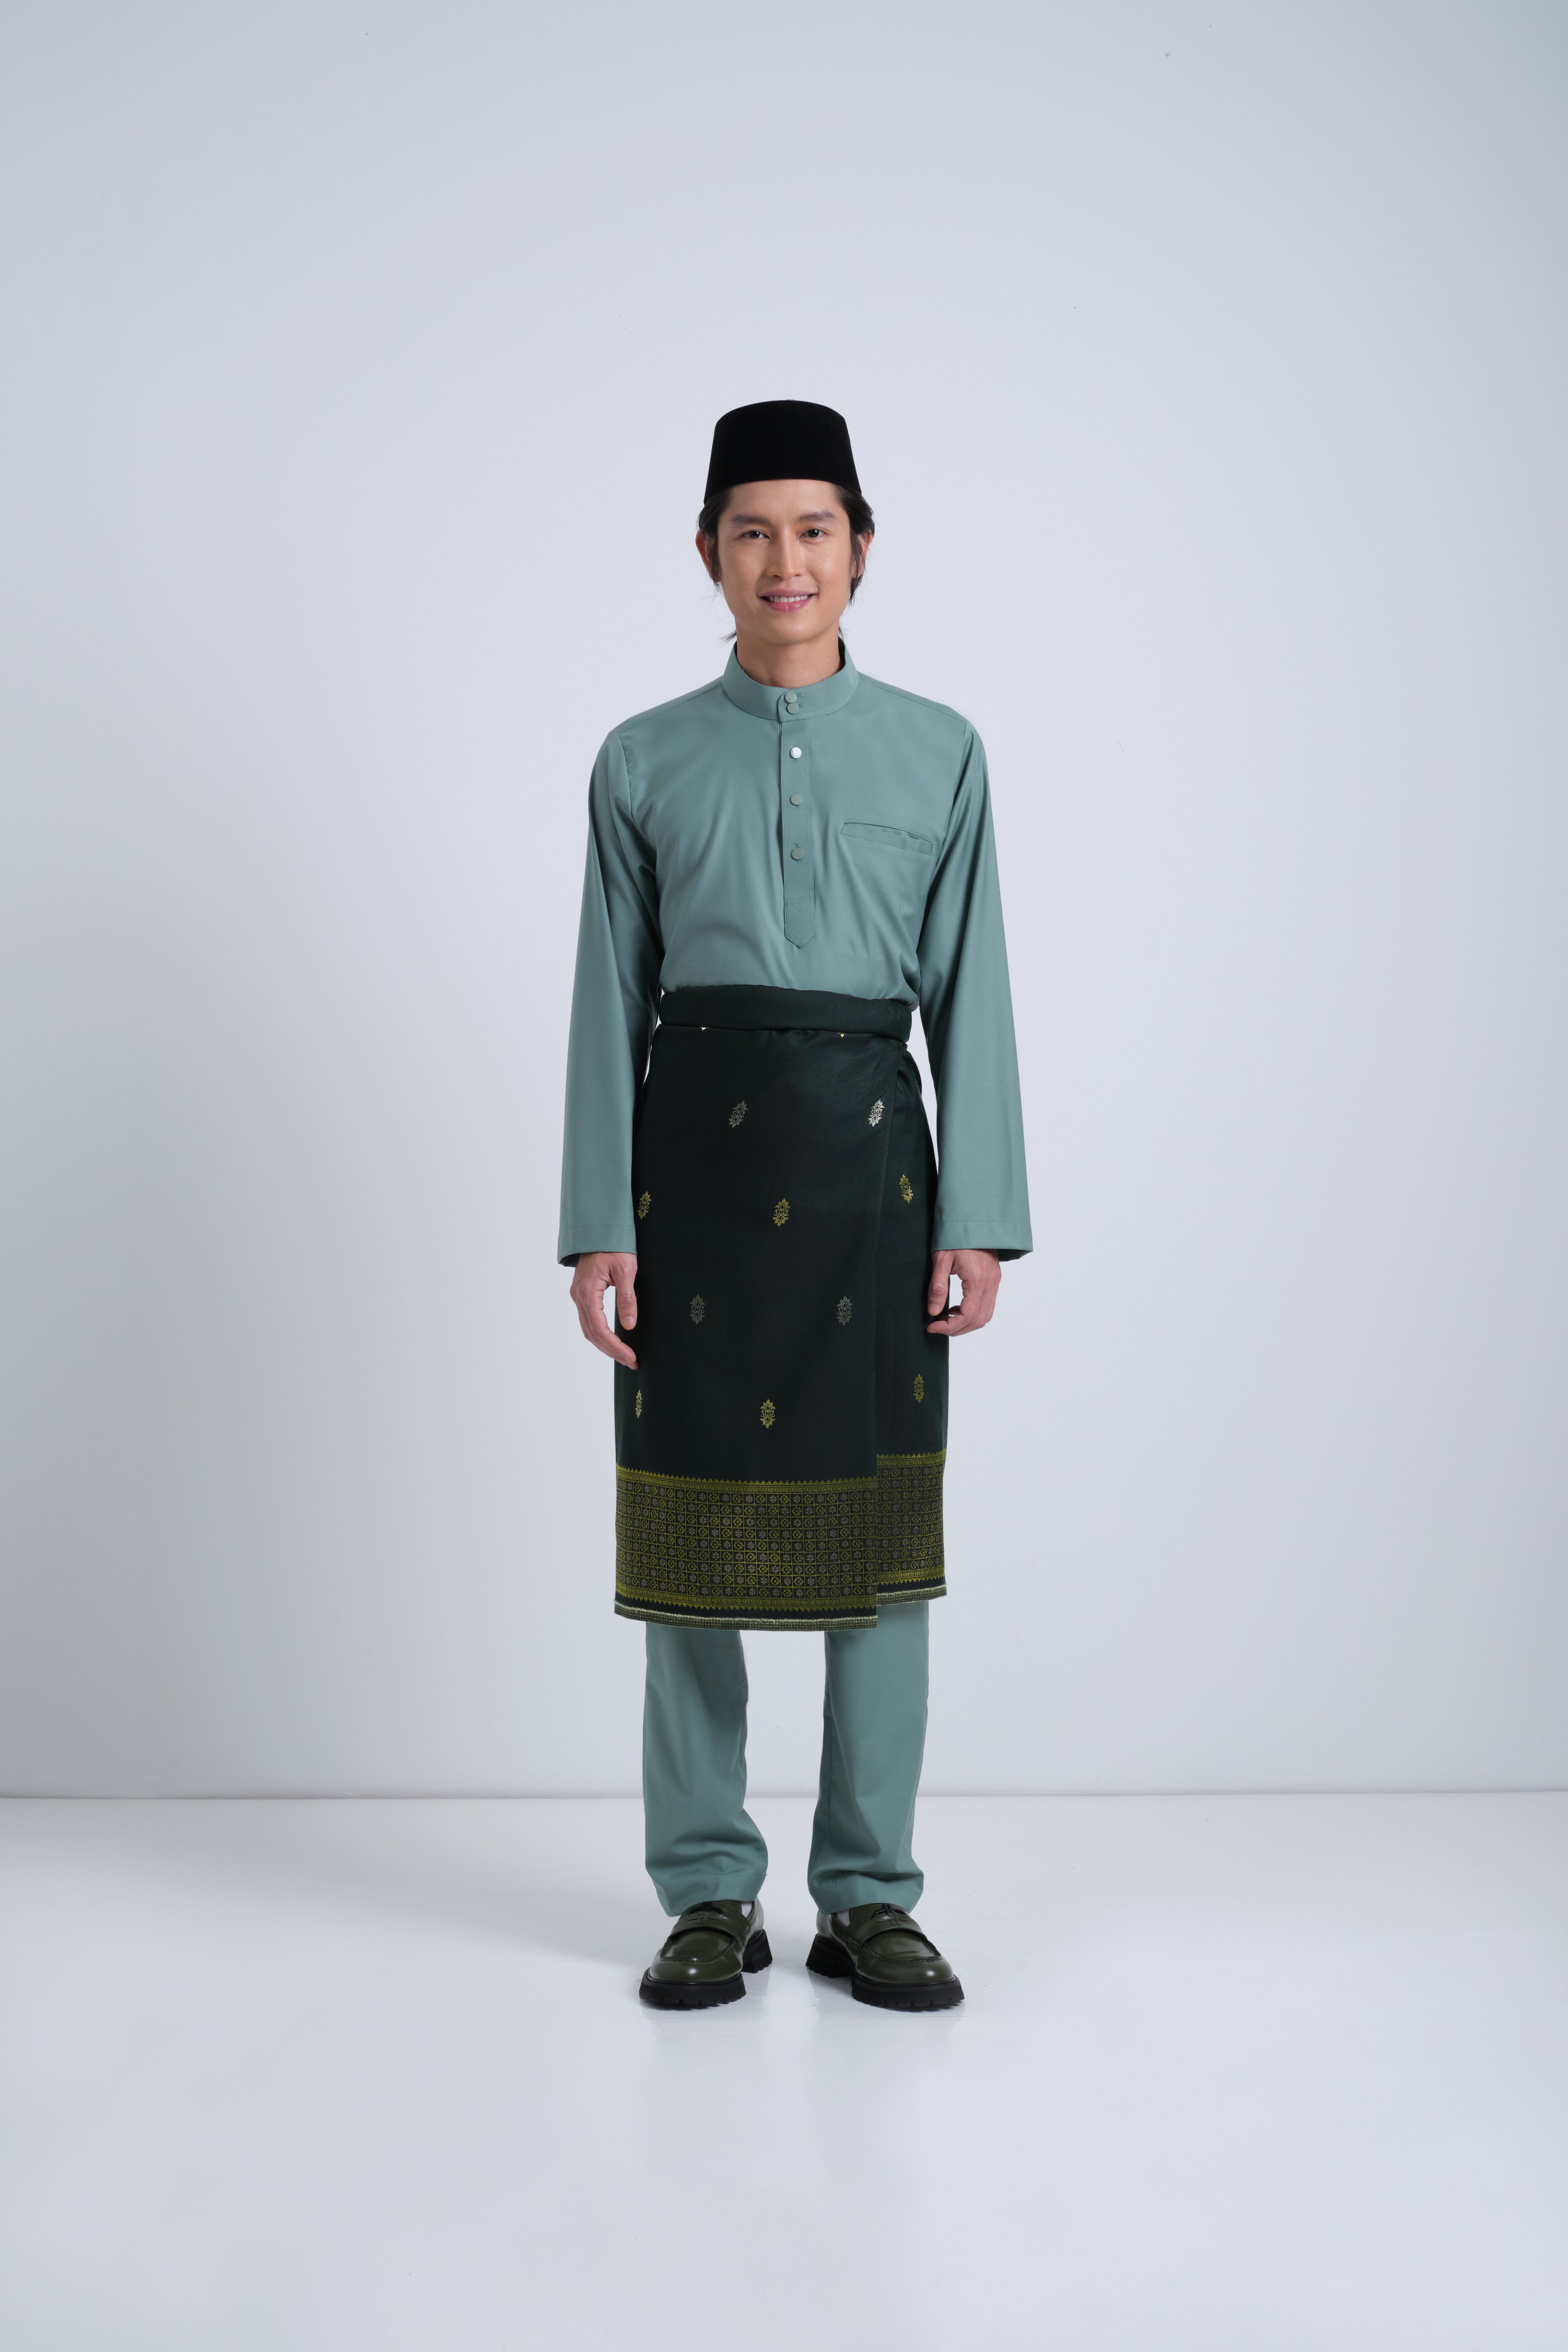 Patawali Baju Melayu Cekak Musang - Soft Teal Green